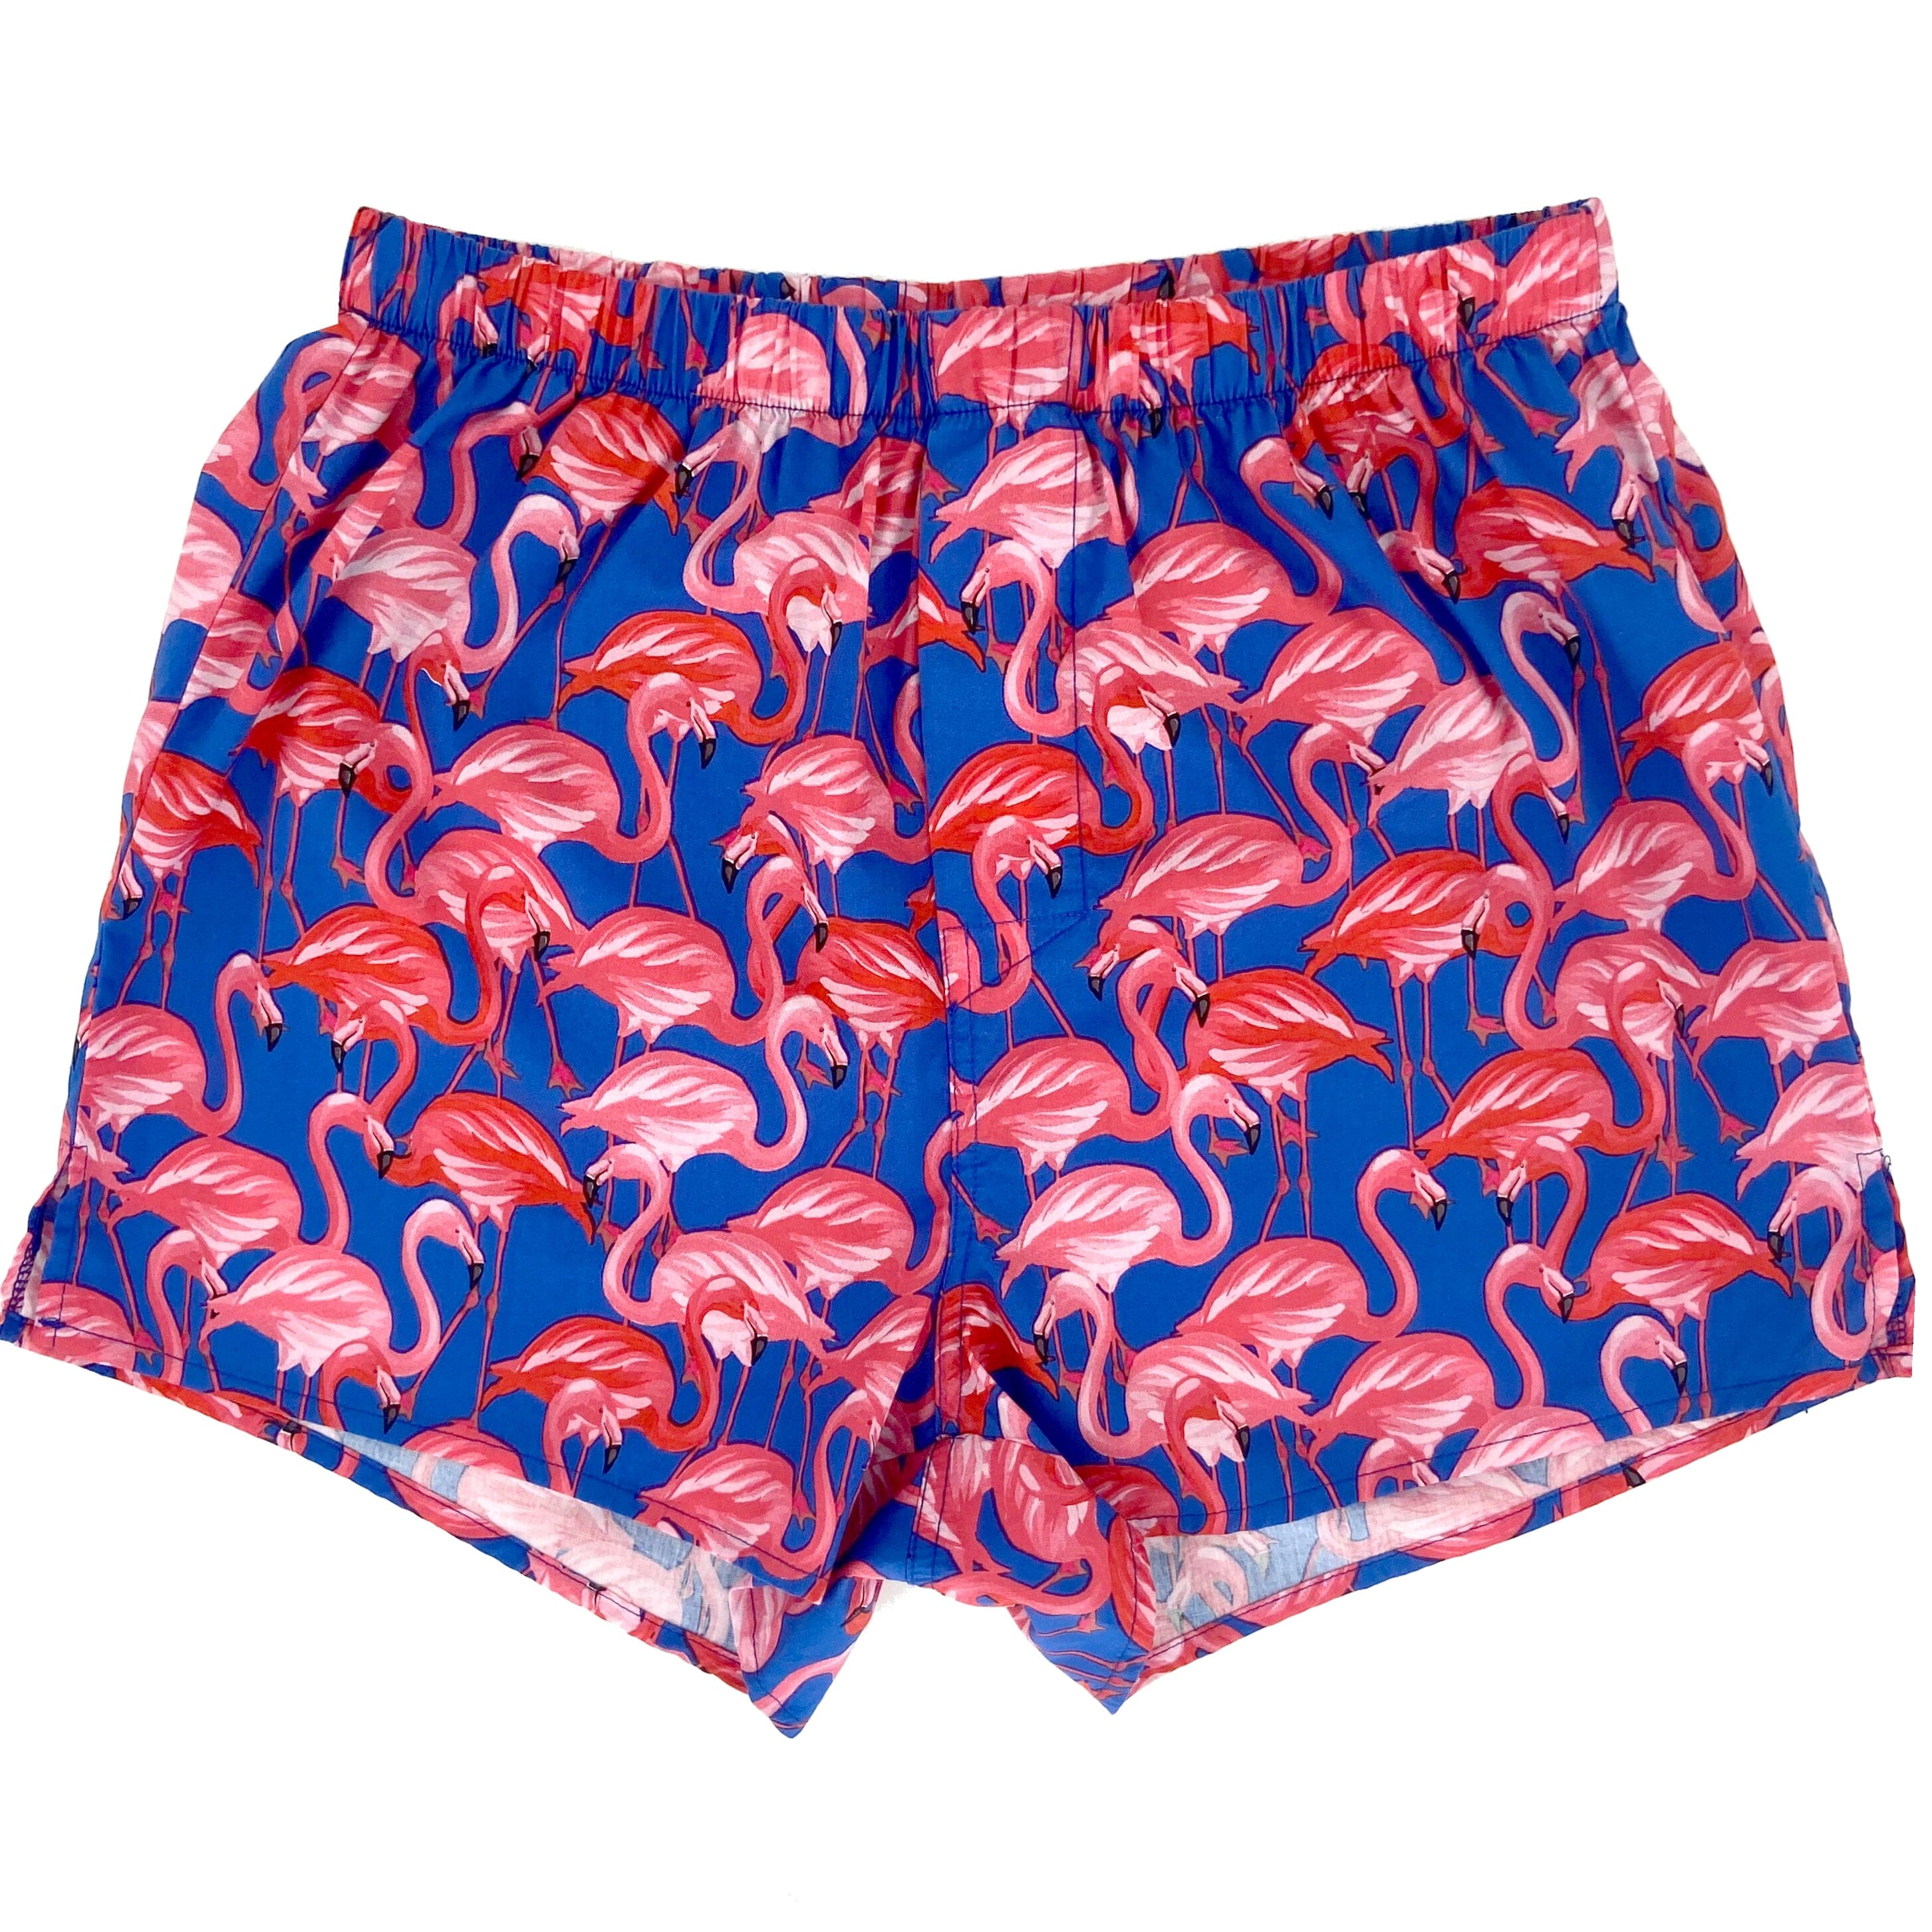 Flamingo Boxers For Men. Buy Bird Patterned Boxer Shorts Underwear